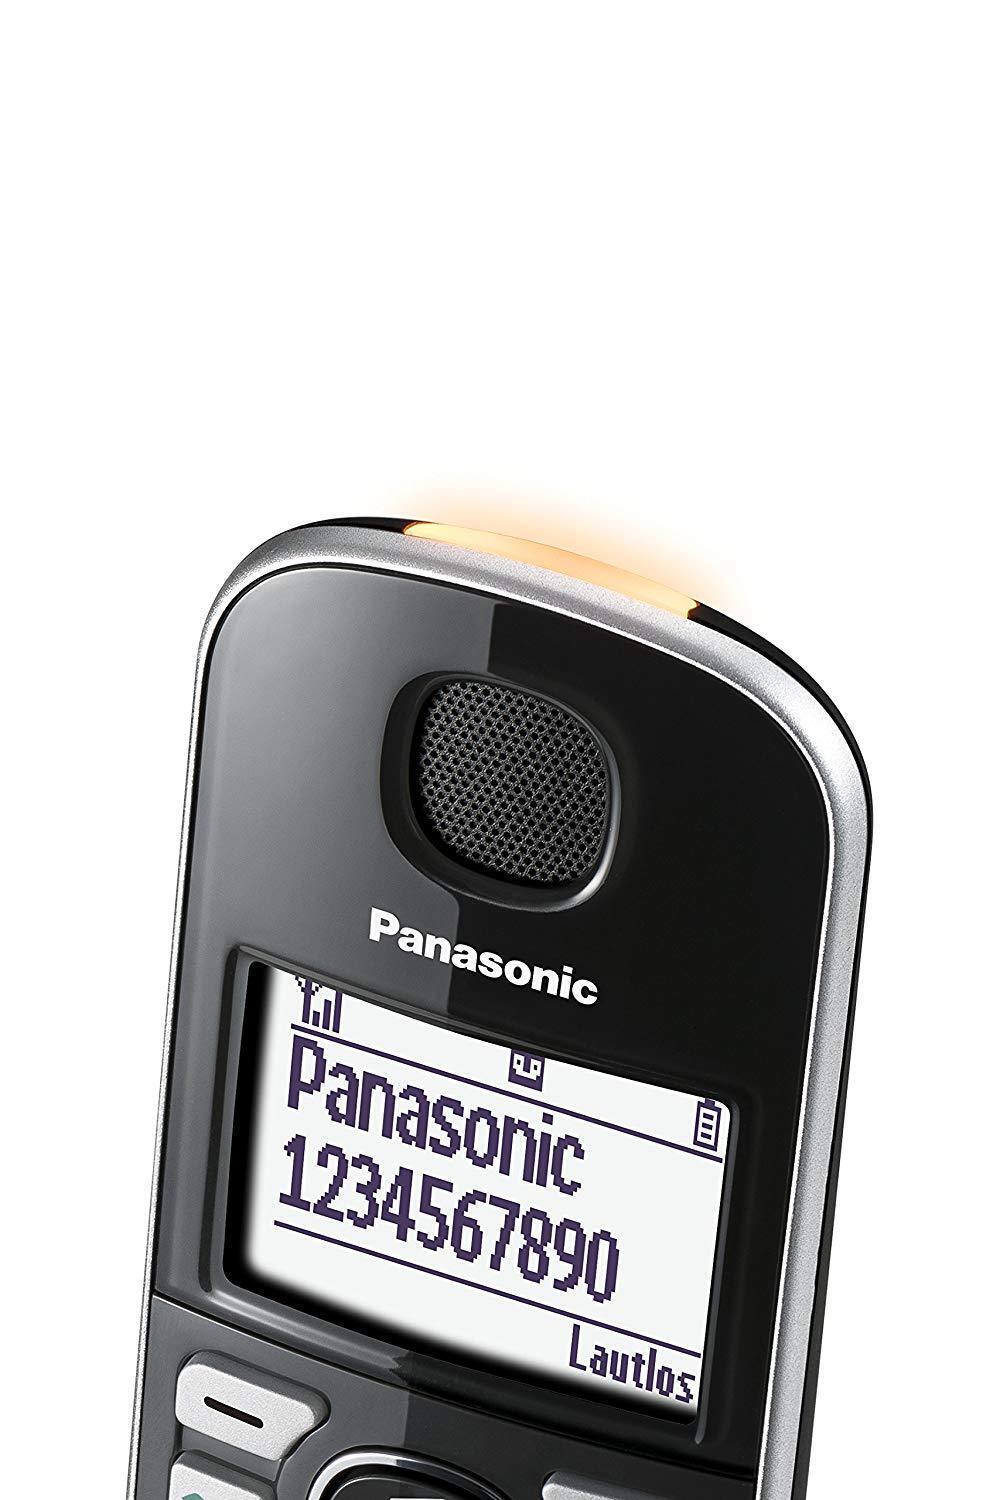 Panasonic KX-TGE520 - Digitales Schnurlos-Telefon Anrufbeantworter KX TGE  520 GS | eBay